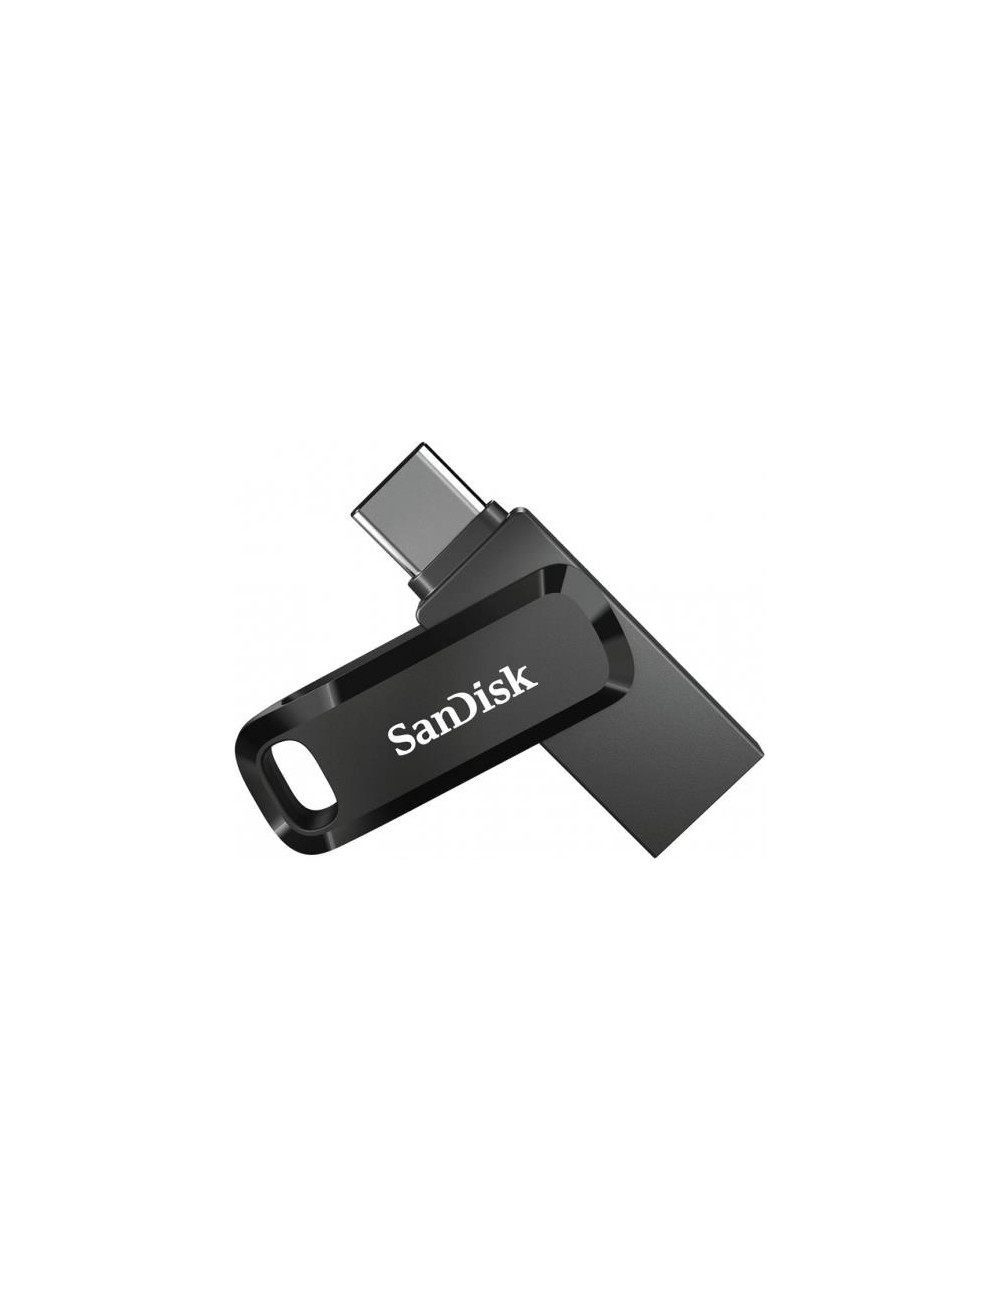 MEMORY DRIVE FLASH USB-C 128GB/SDDDC3-128G-G46 SANDISK